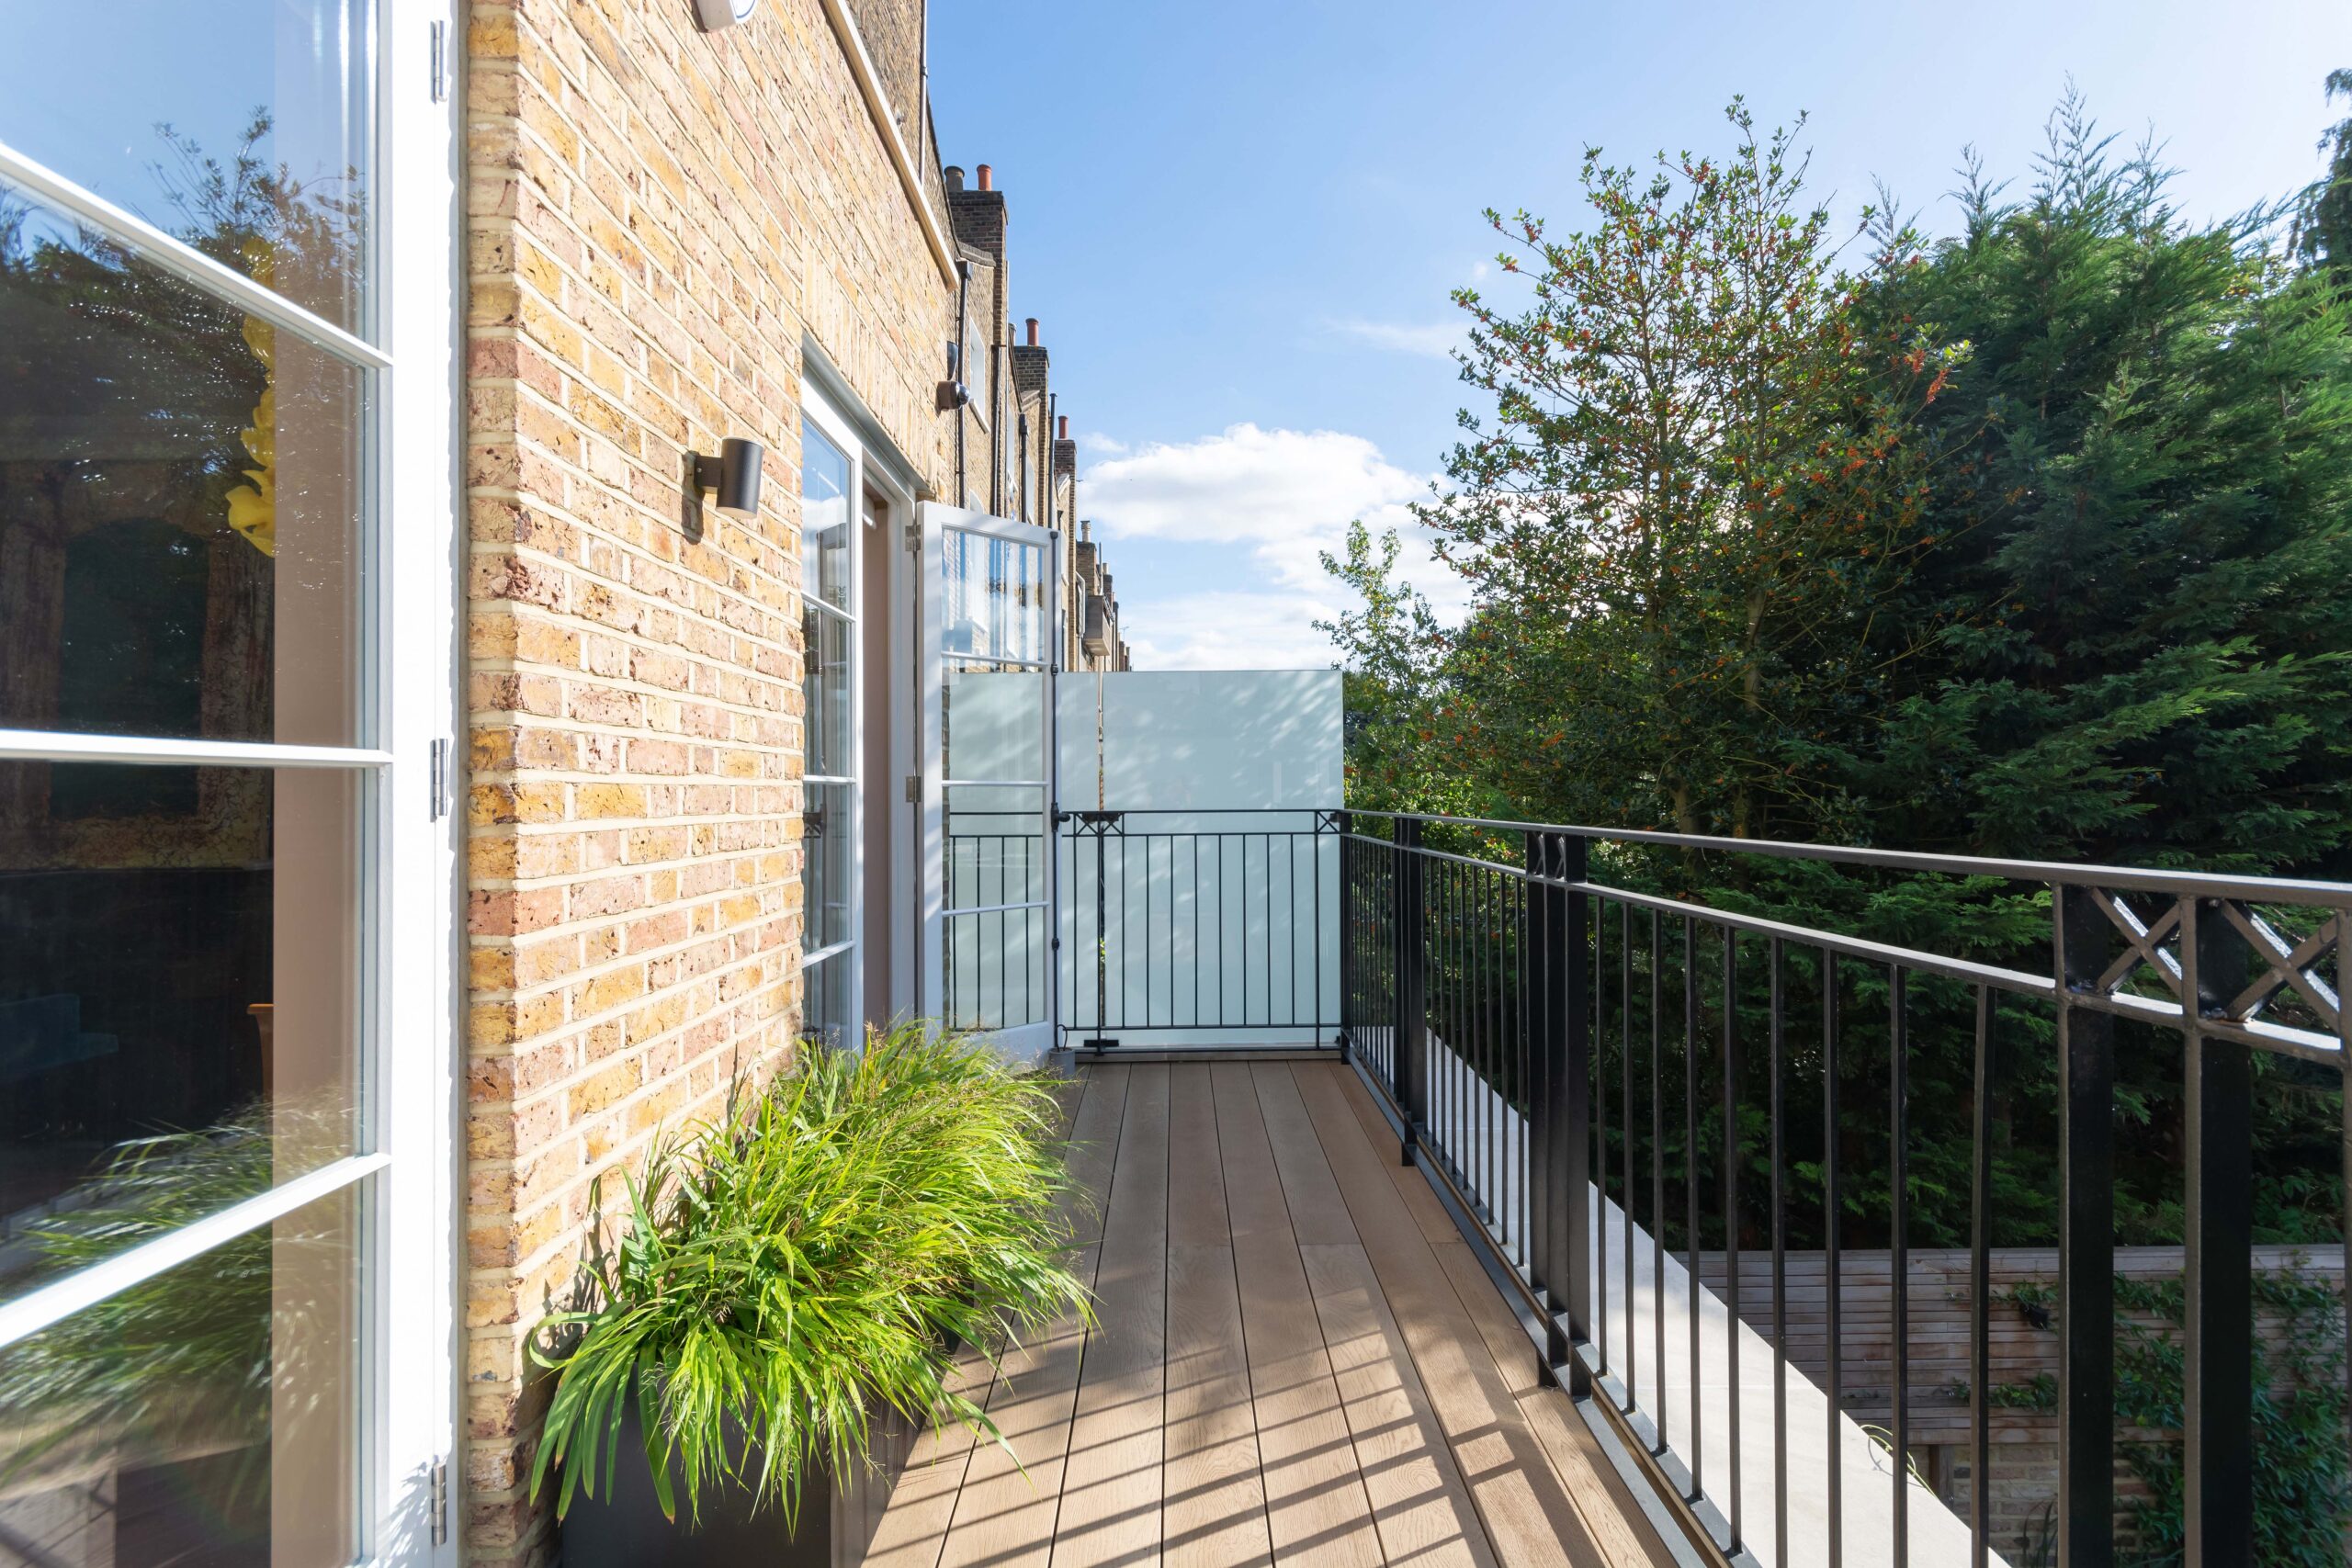 Hammersmith Grove balcony with cast-iron railings